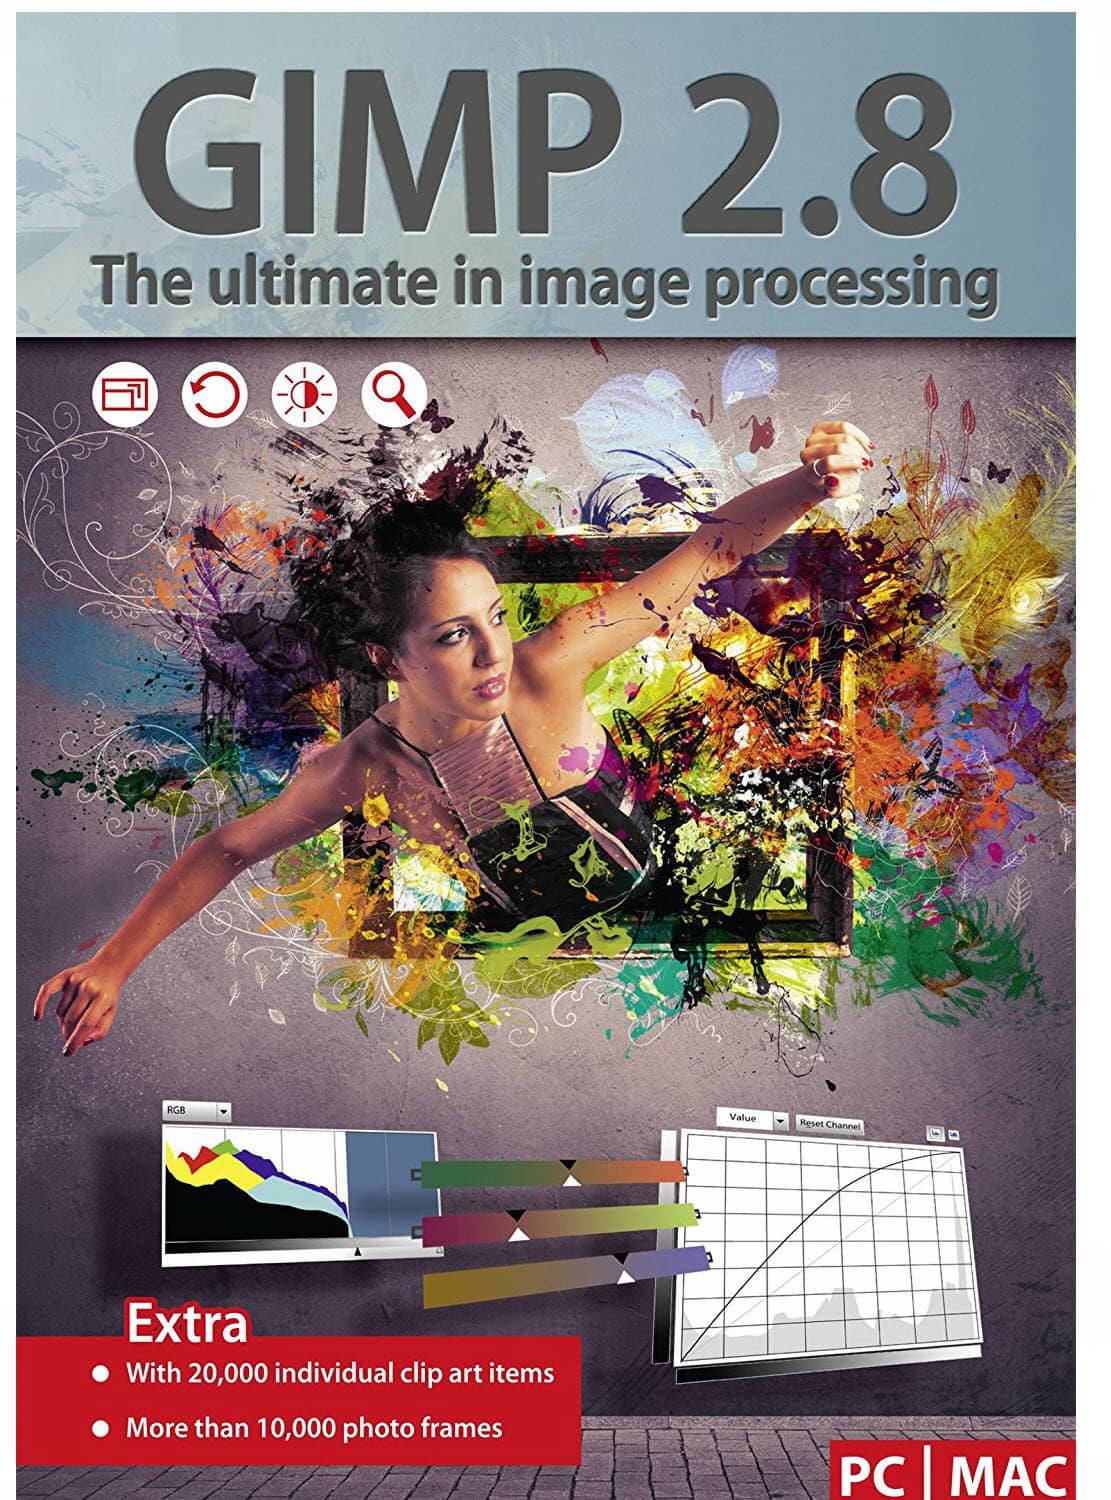 GIMP 2.8 Ultimate Image Processing